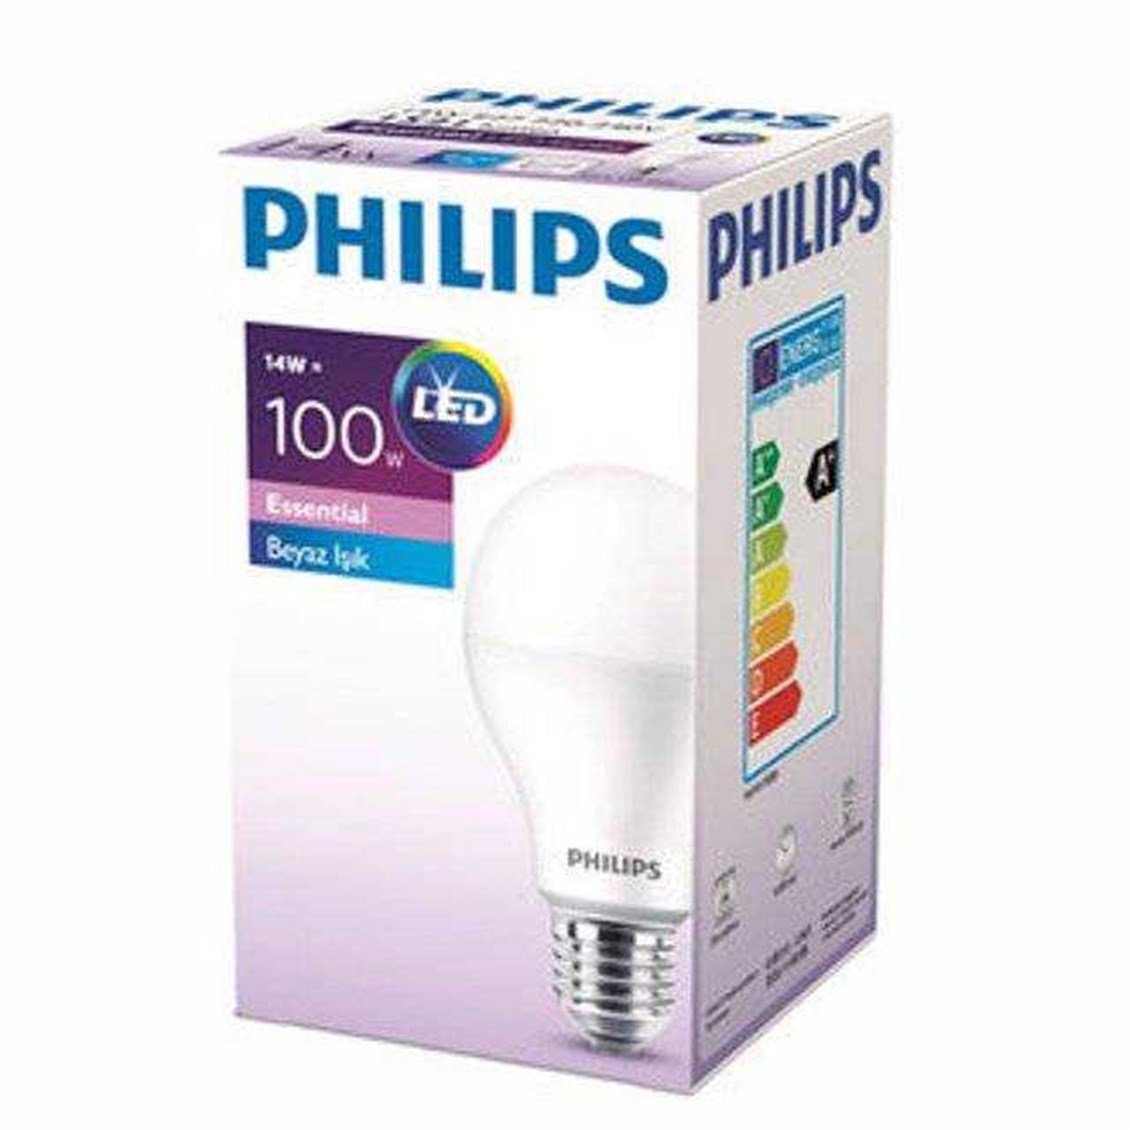 Philips Beyaz Led Ampul 14 Watt E27 - Onur Market